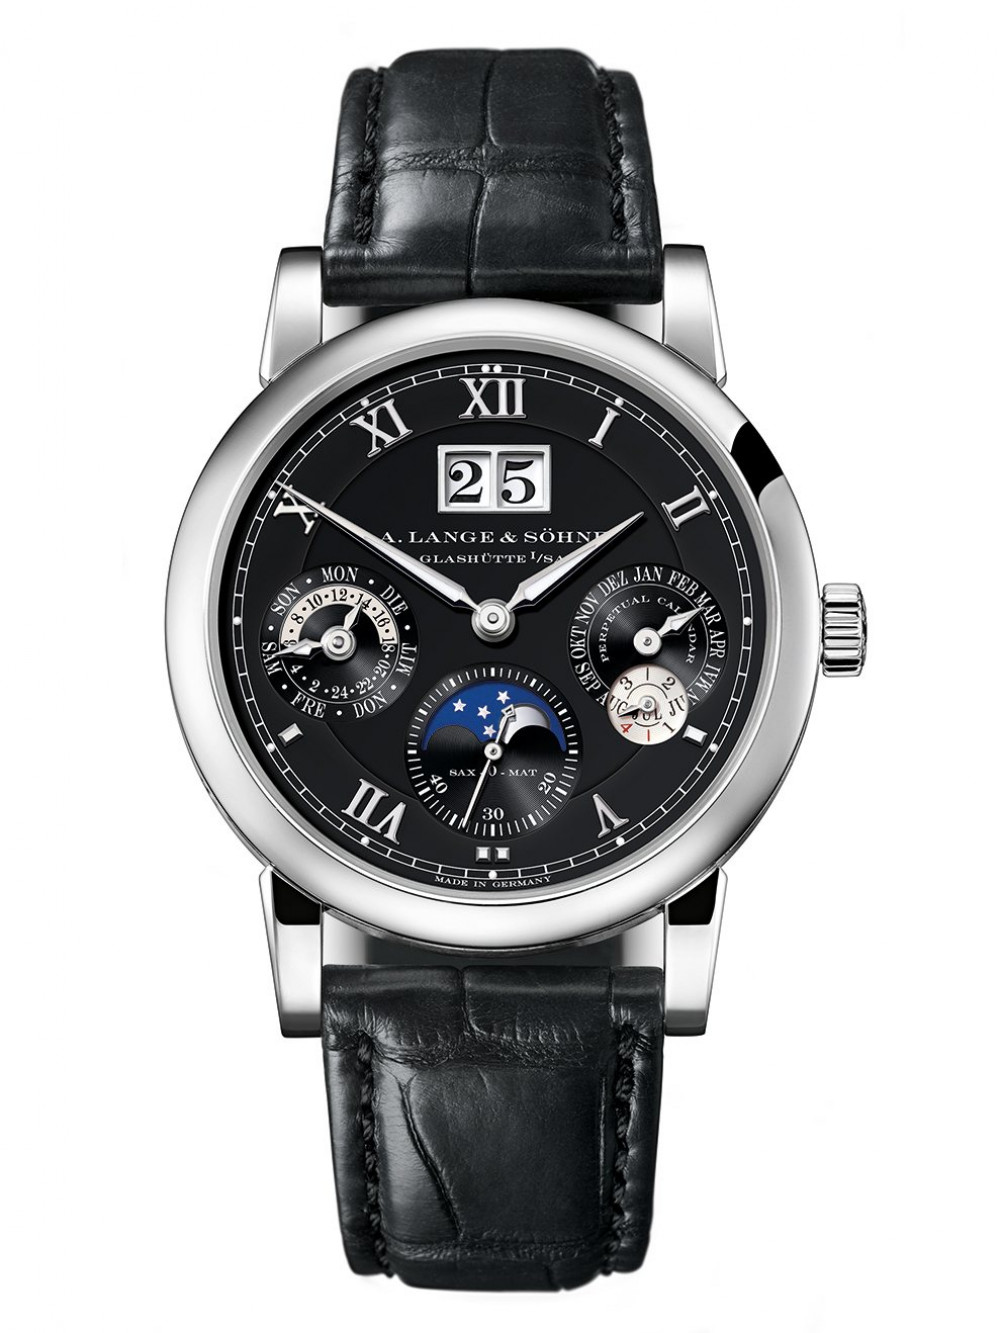 Zegarek firmy A. Lange & Söhne, model Langematik Perpetual